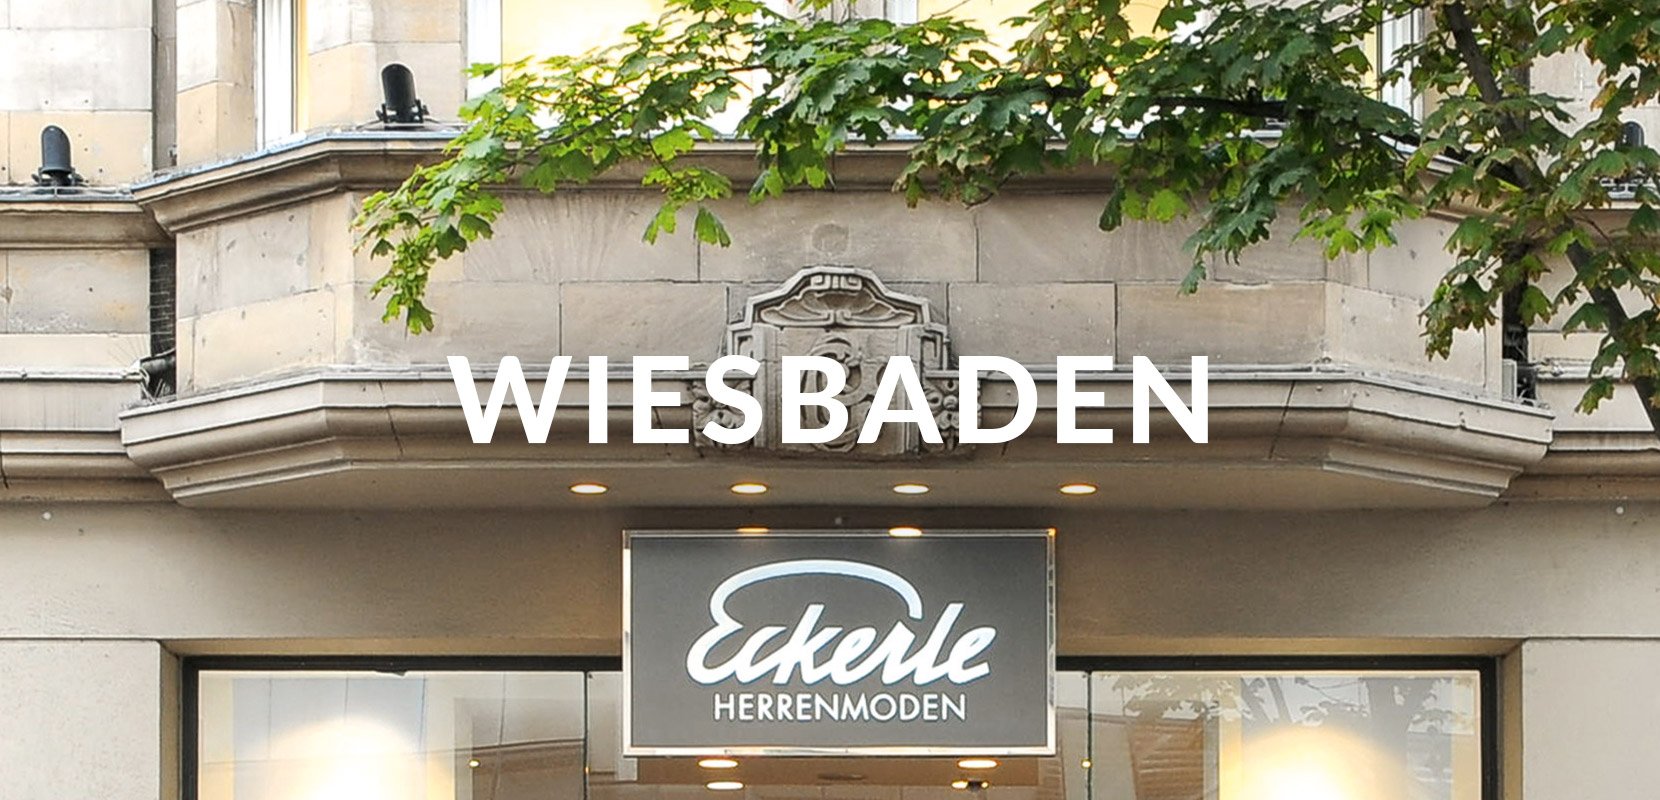 Eckerle Wiesbaden